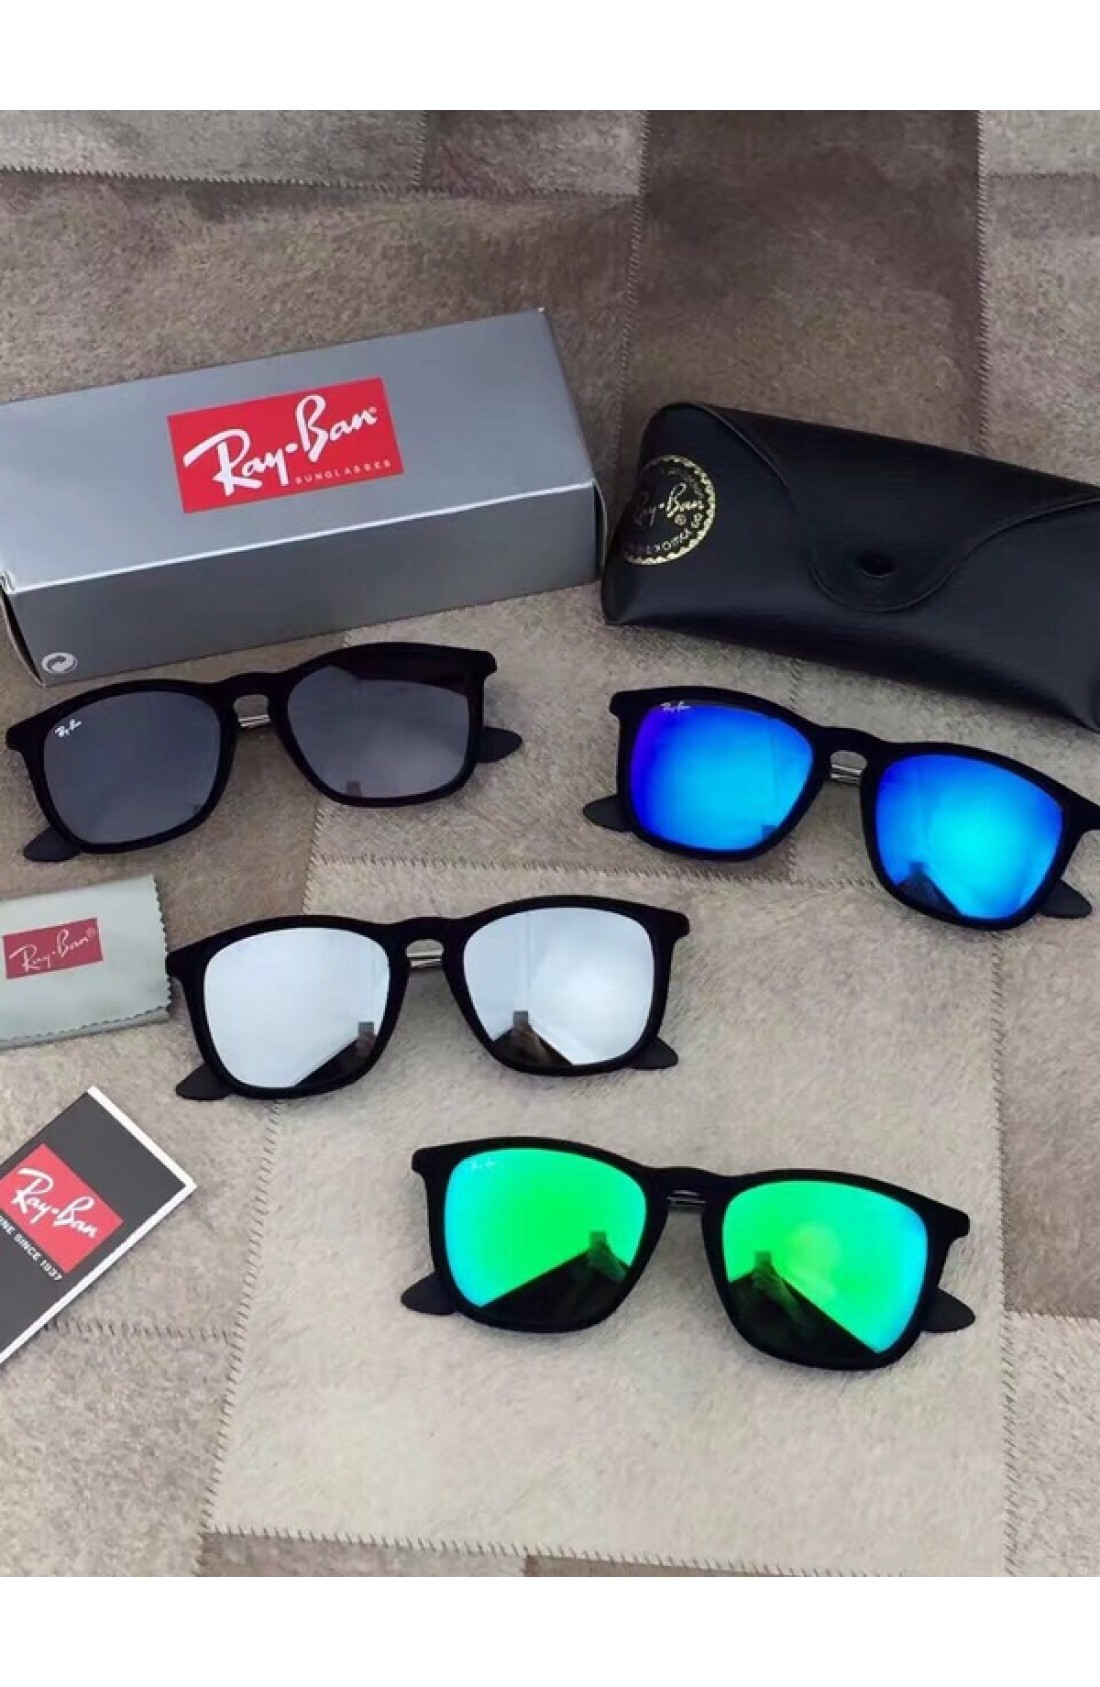 rb sunglasses cheap